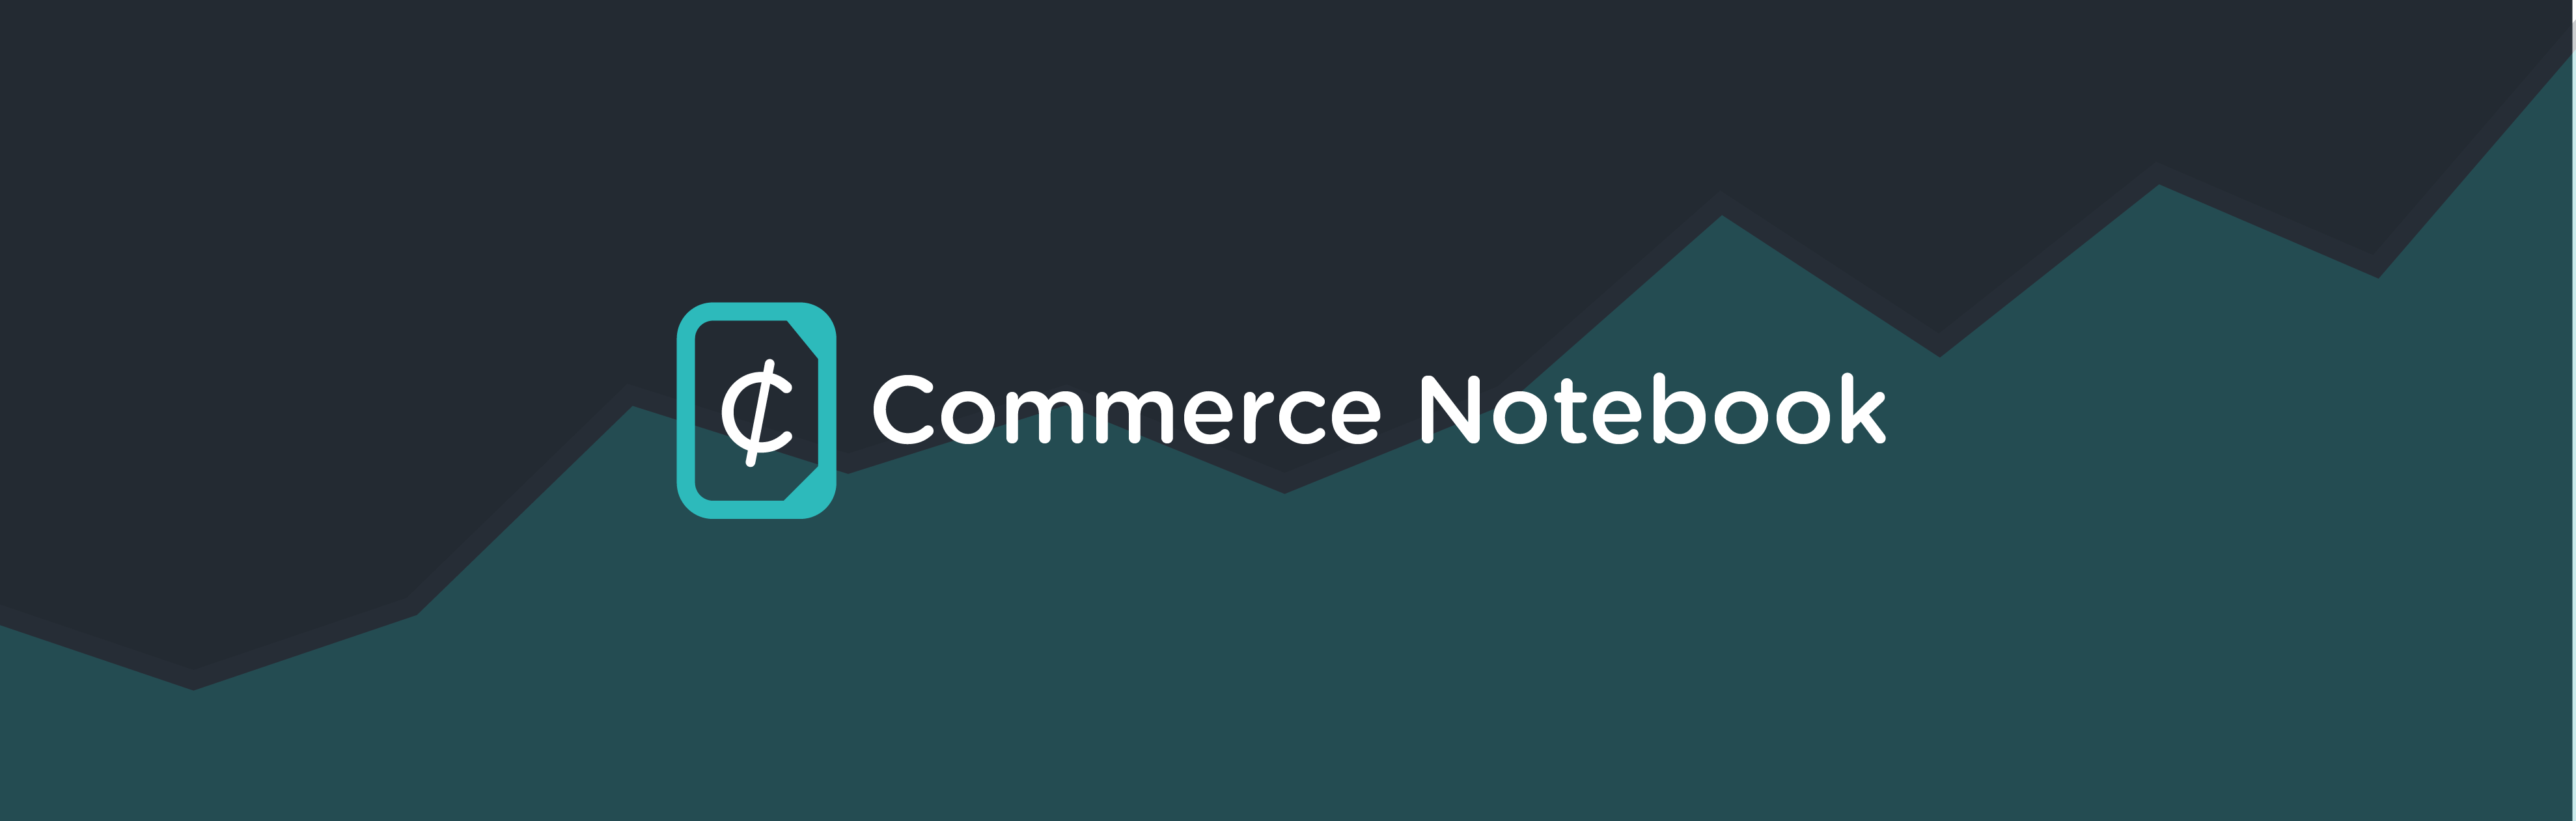 Commerce Notebook media 1